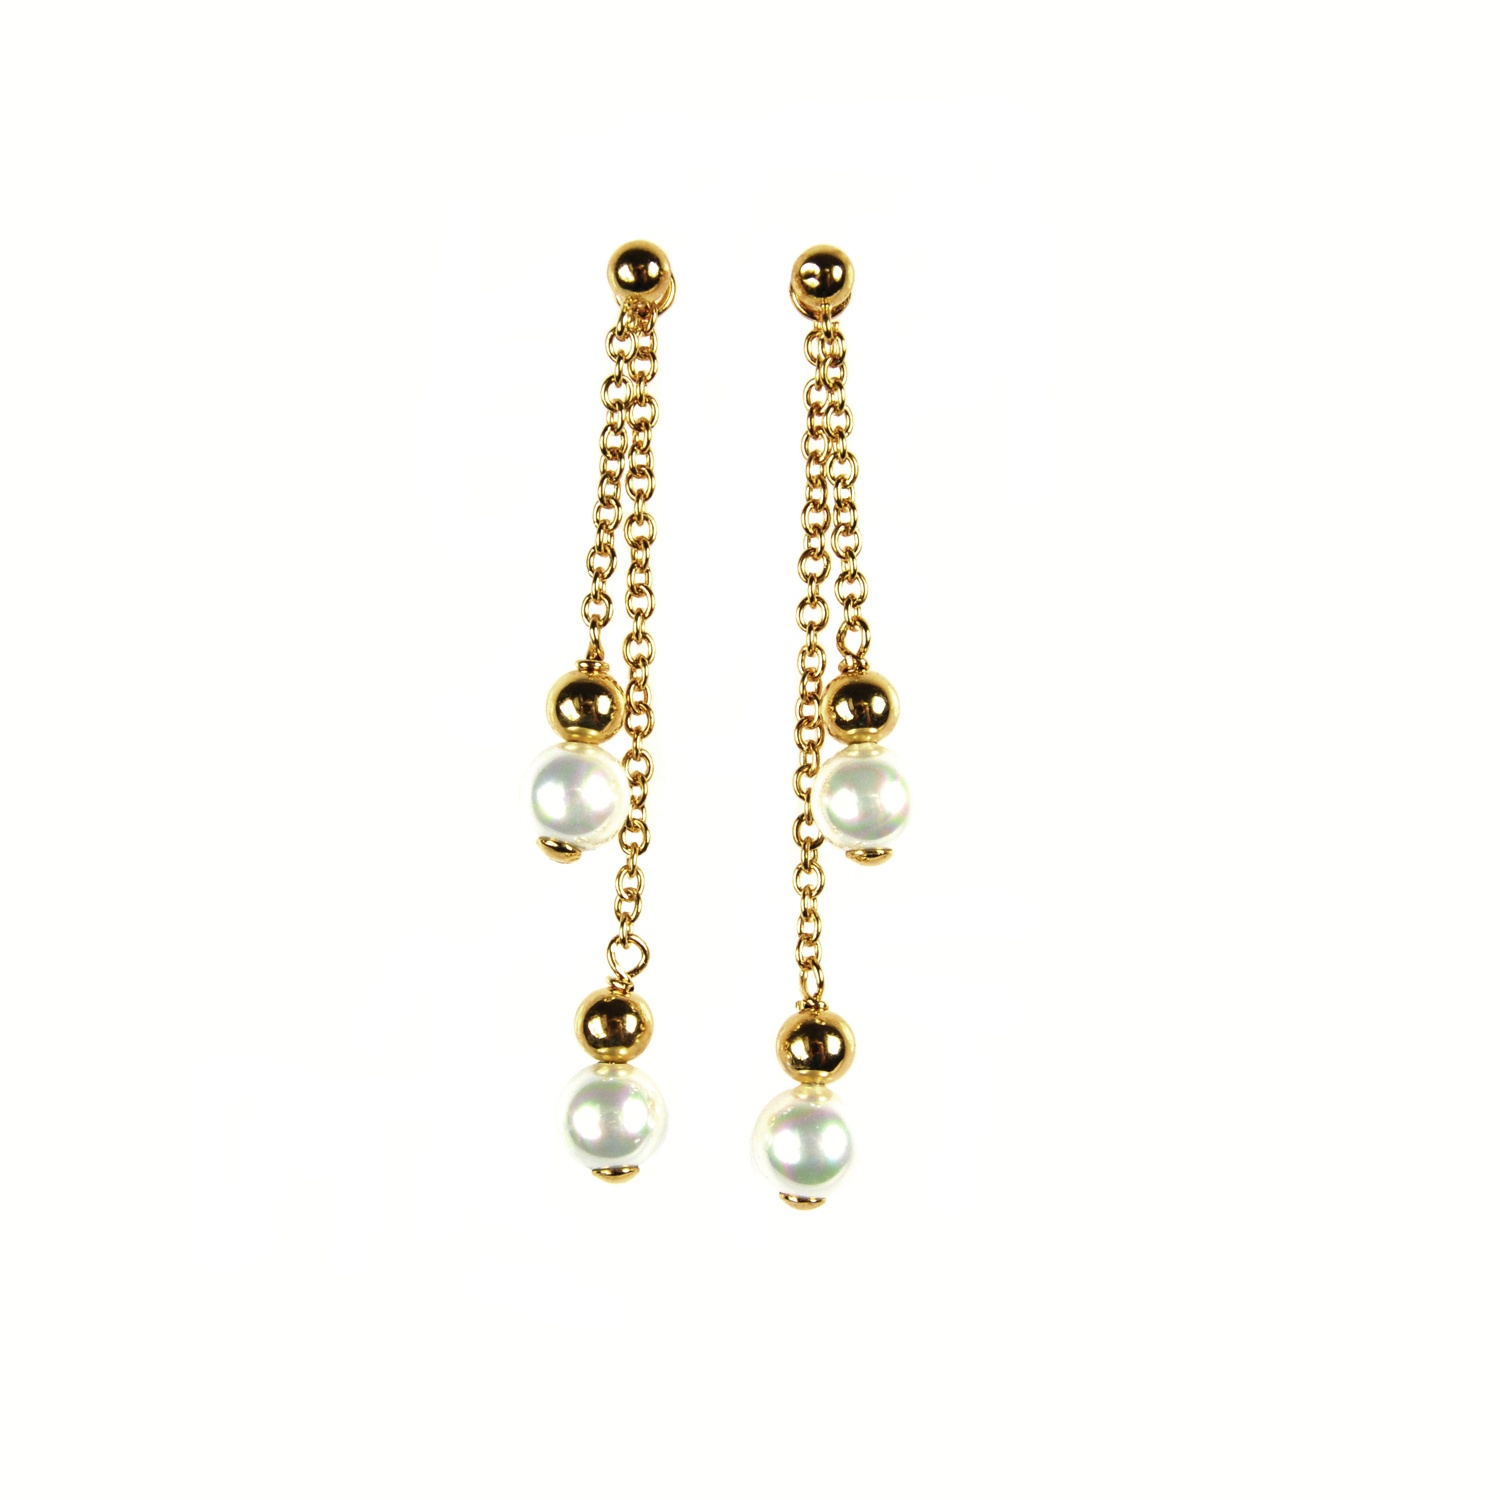 Goldplated earrings - 2 in 1 2